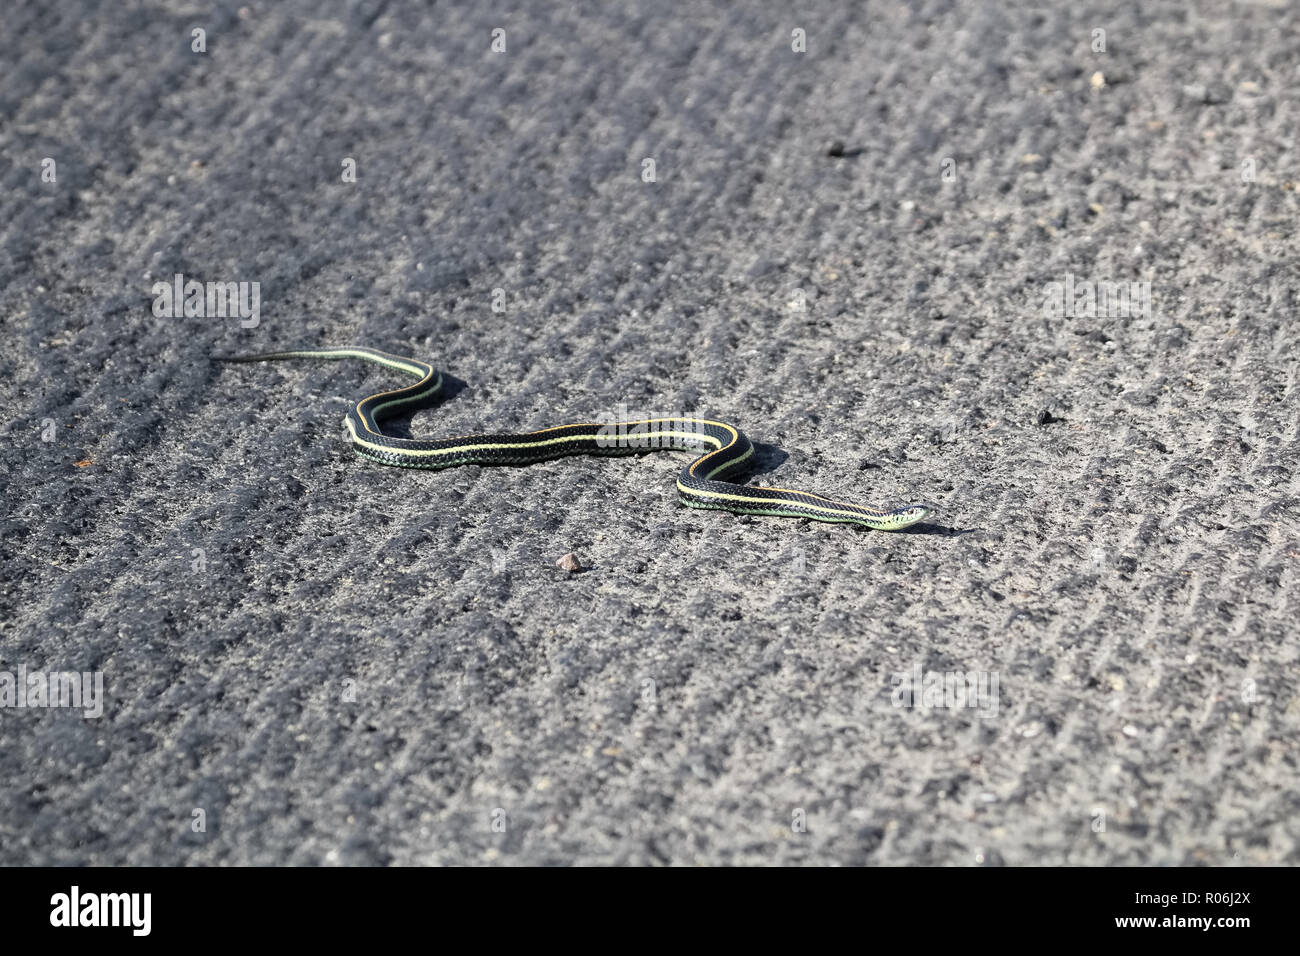 Un Garter Snake cruza por una carretera irregular Foto de stock